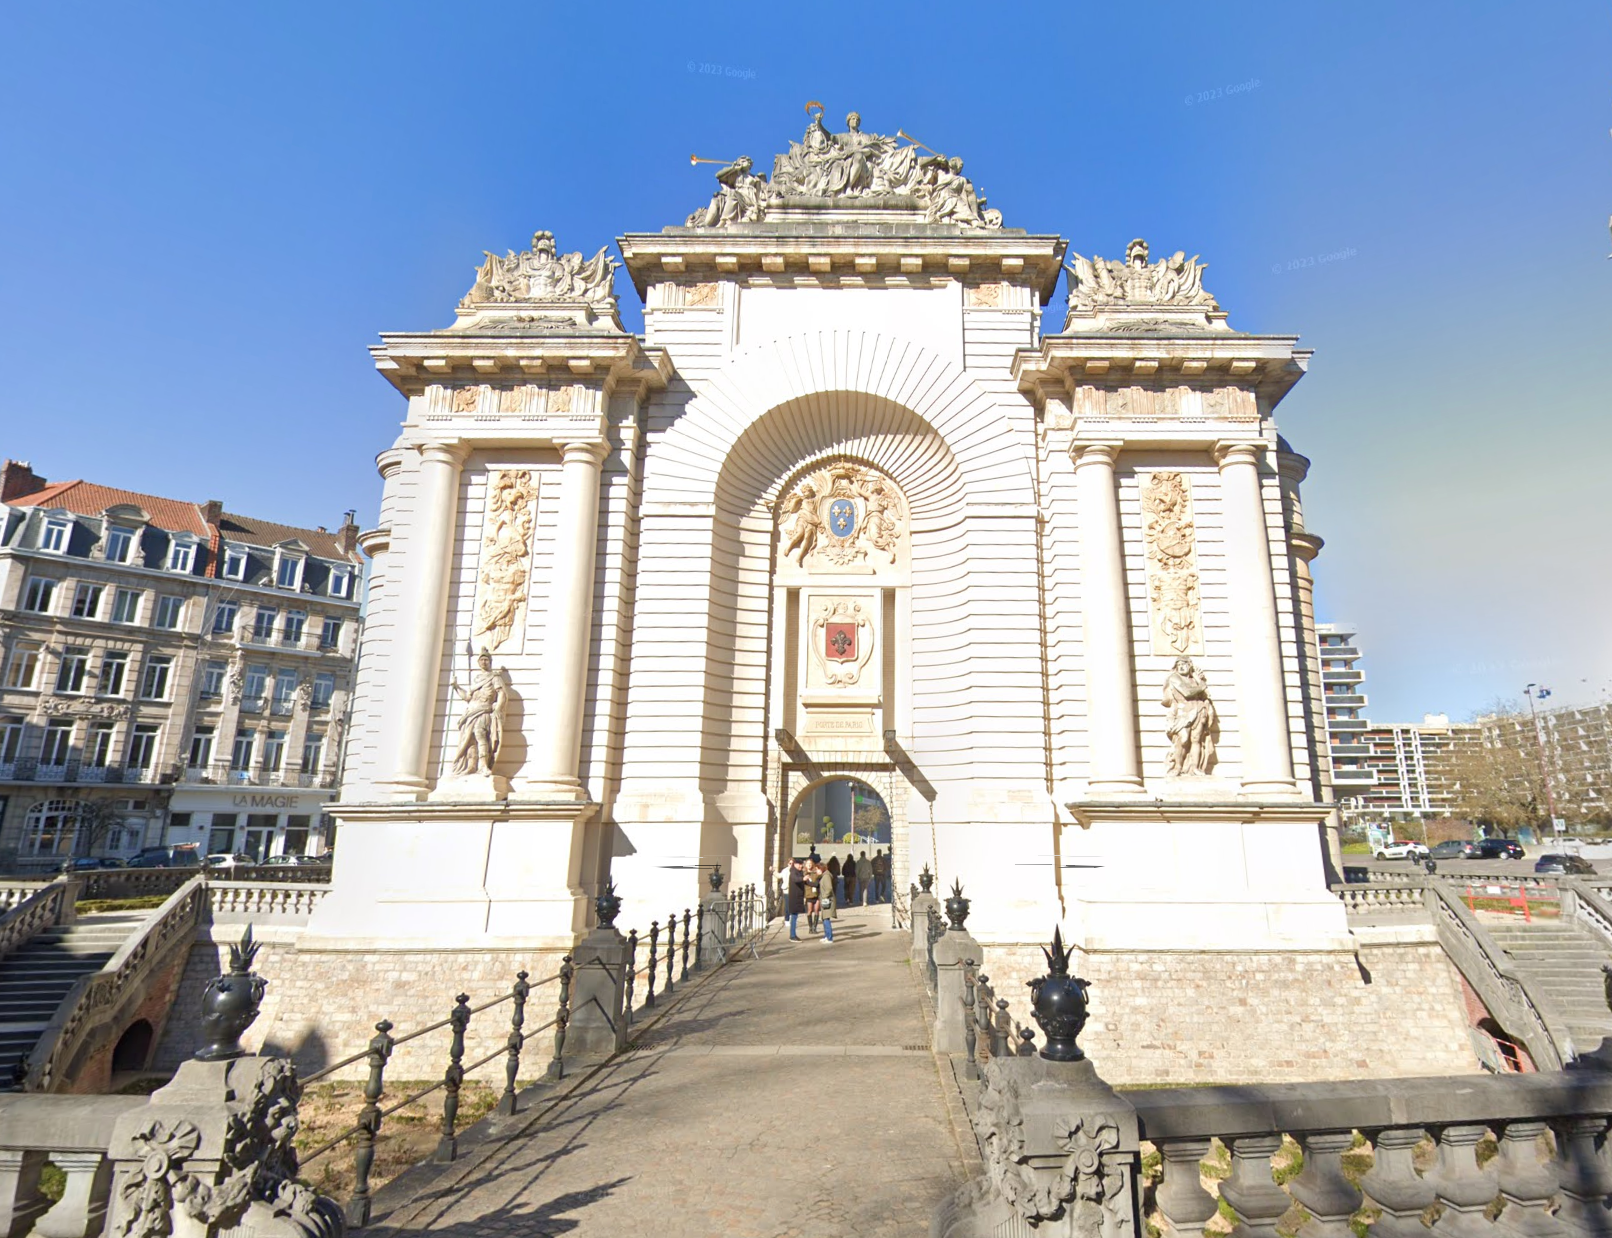 Porte de Paris by Google Earth